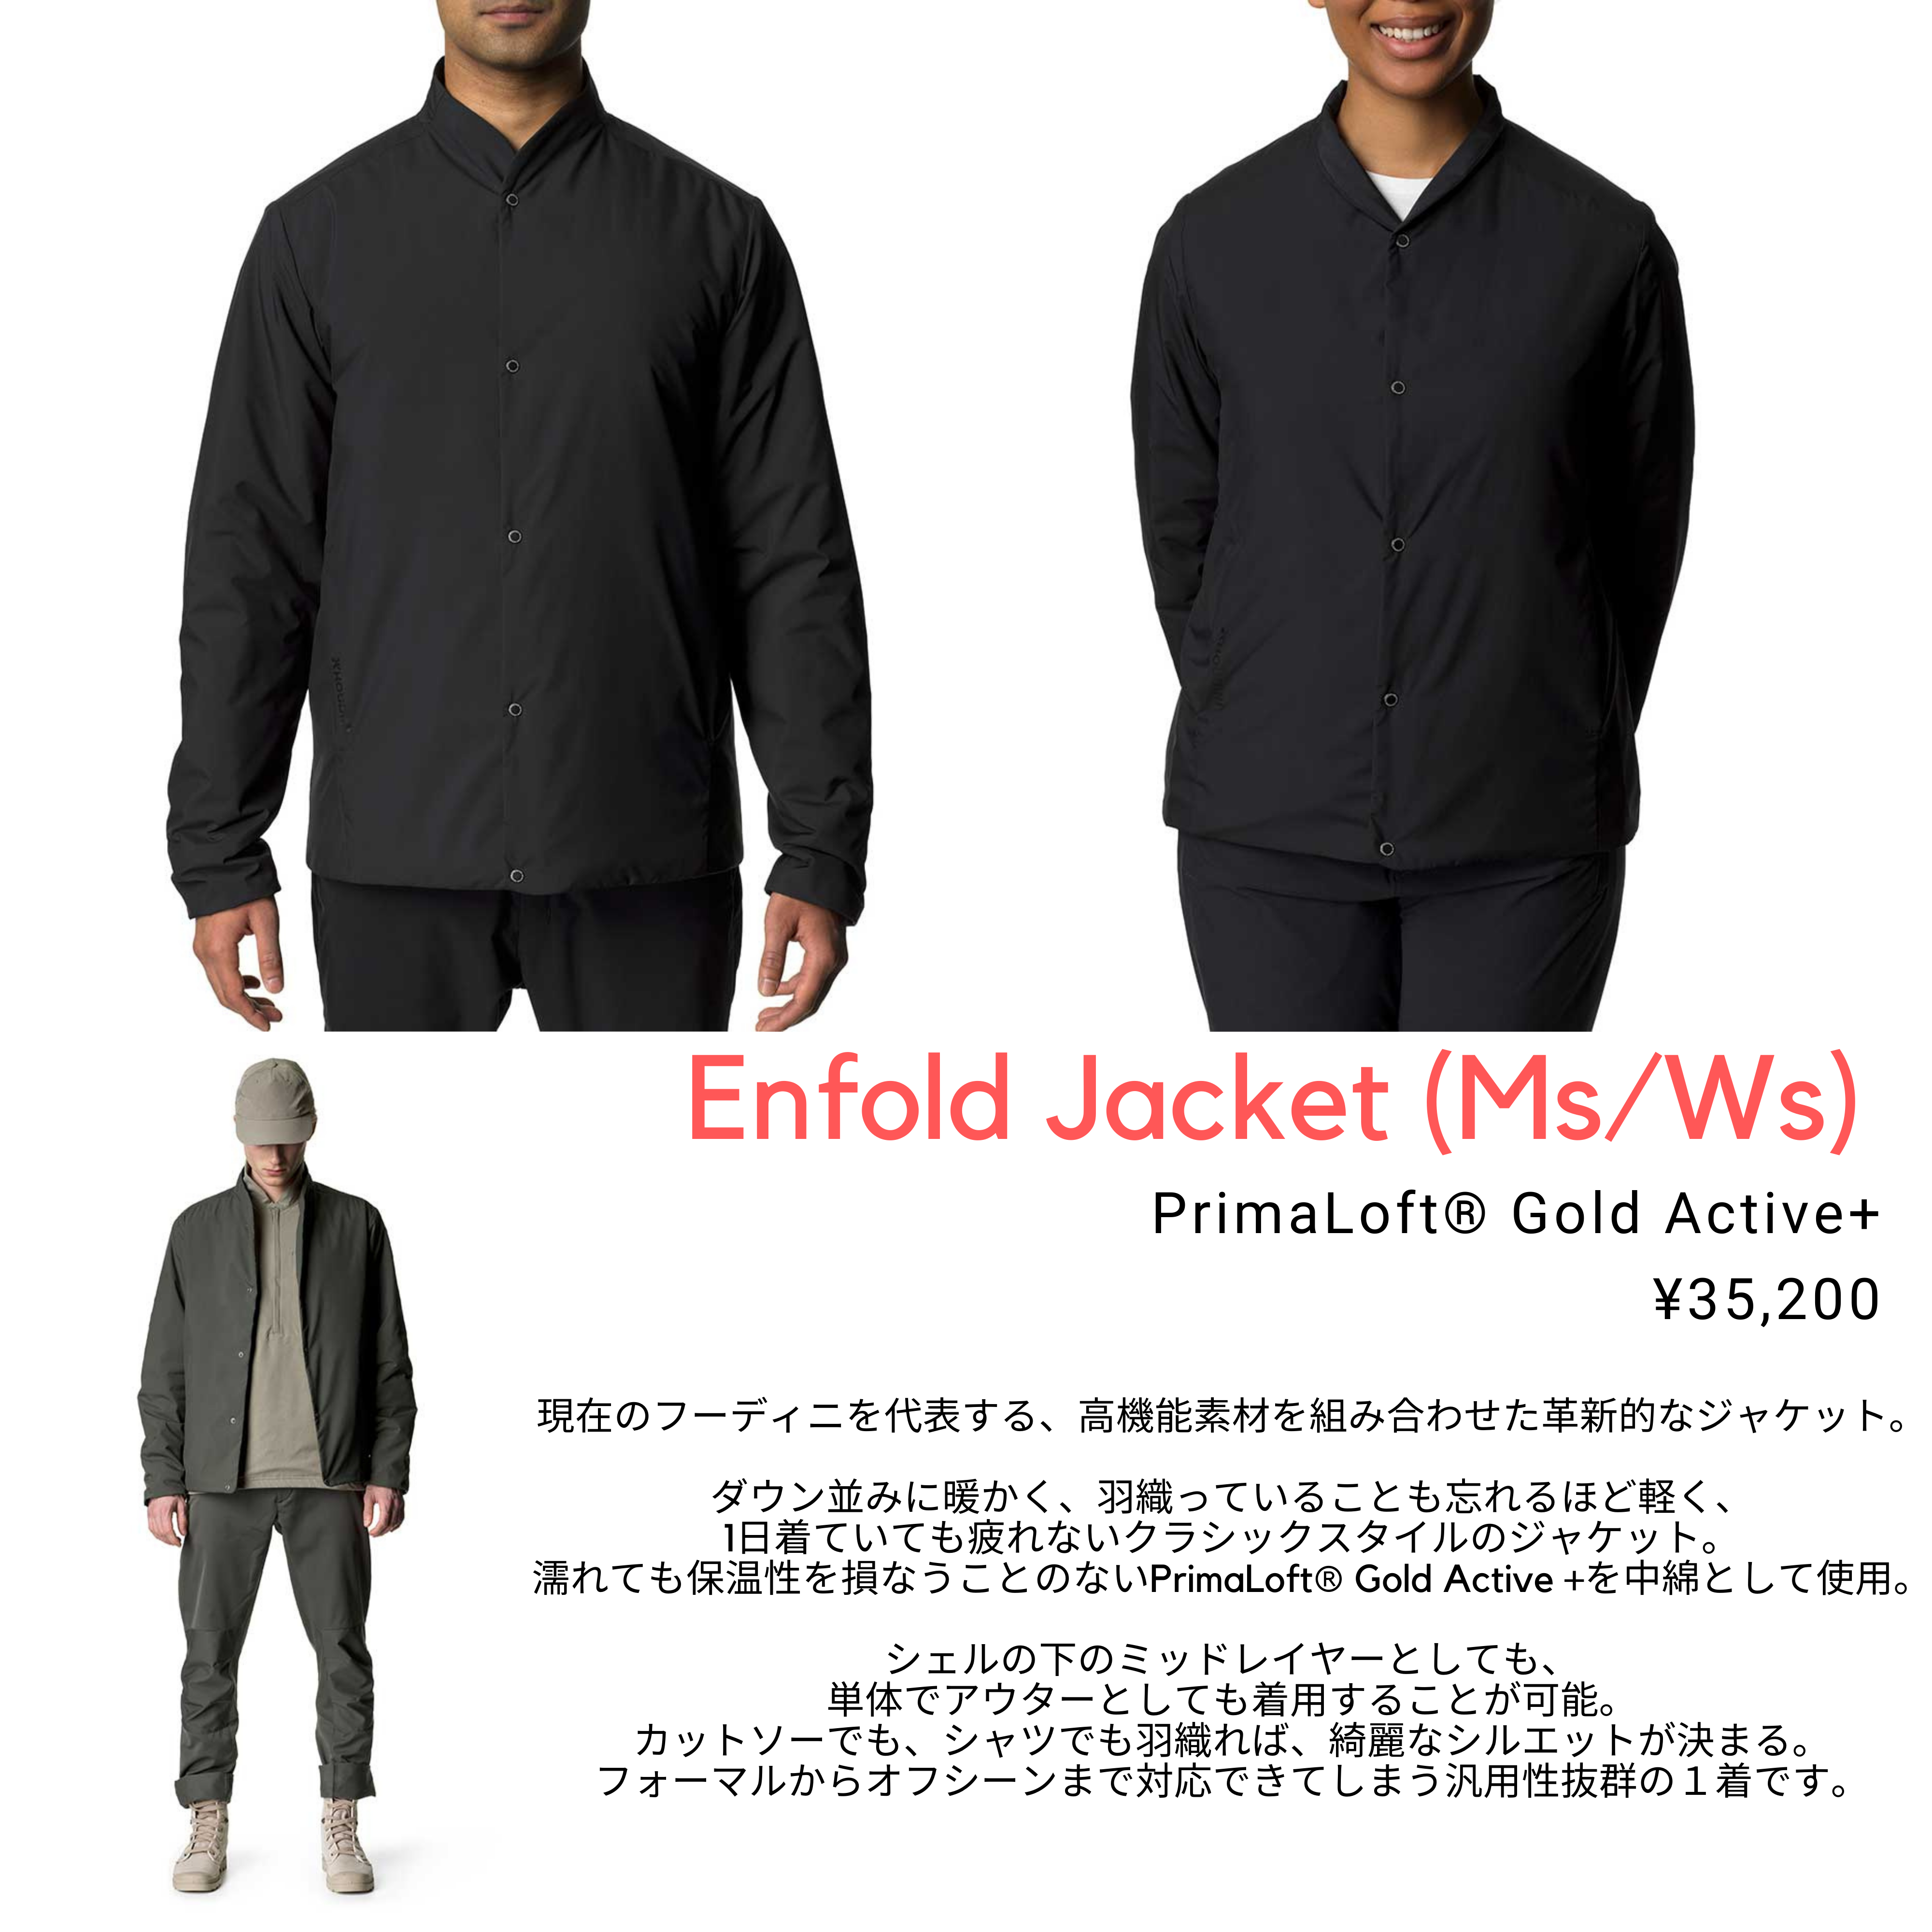 Enfold Jacket (Ms/Ws) PrimaLoft® Gold Active+